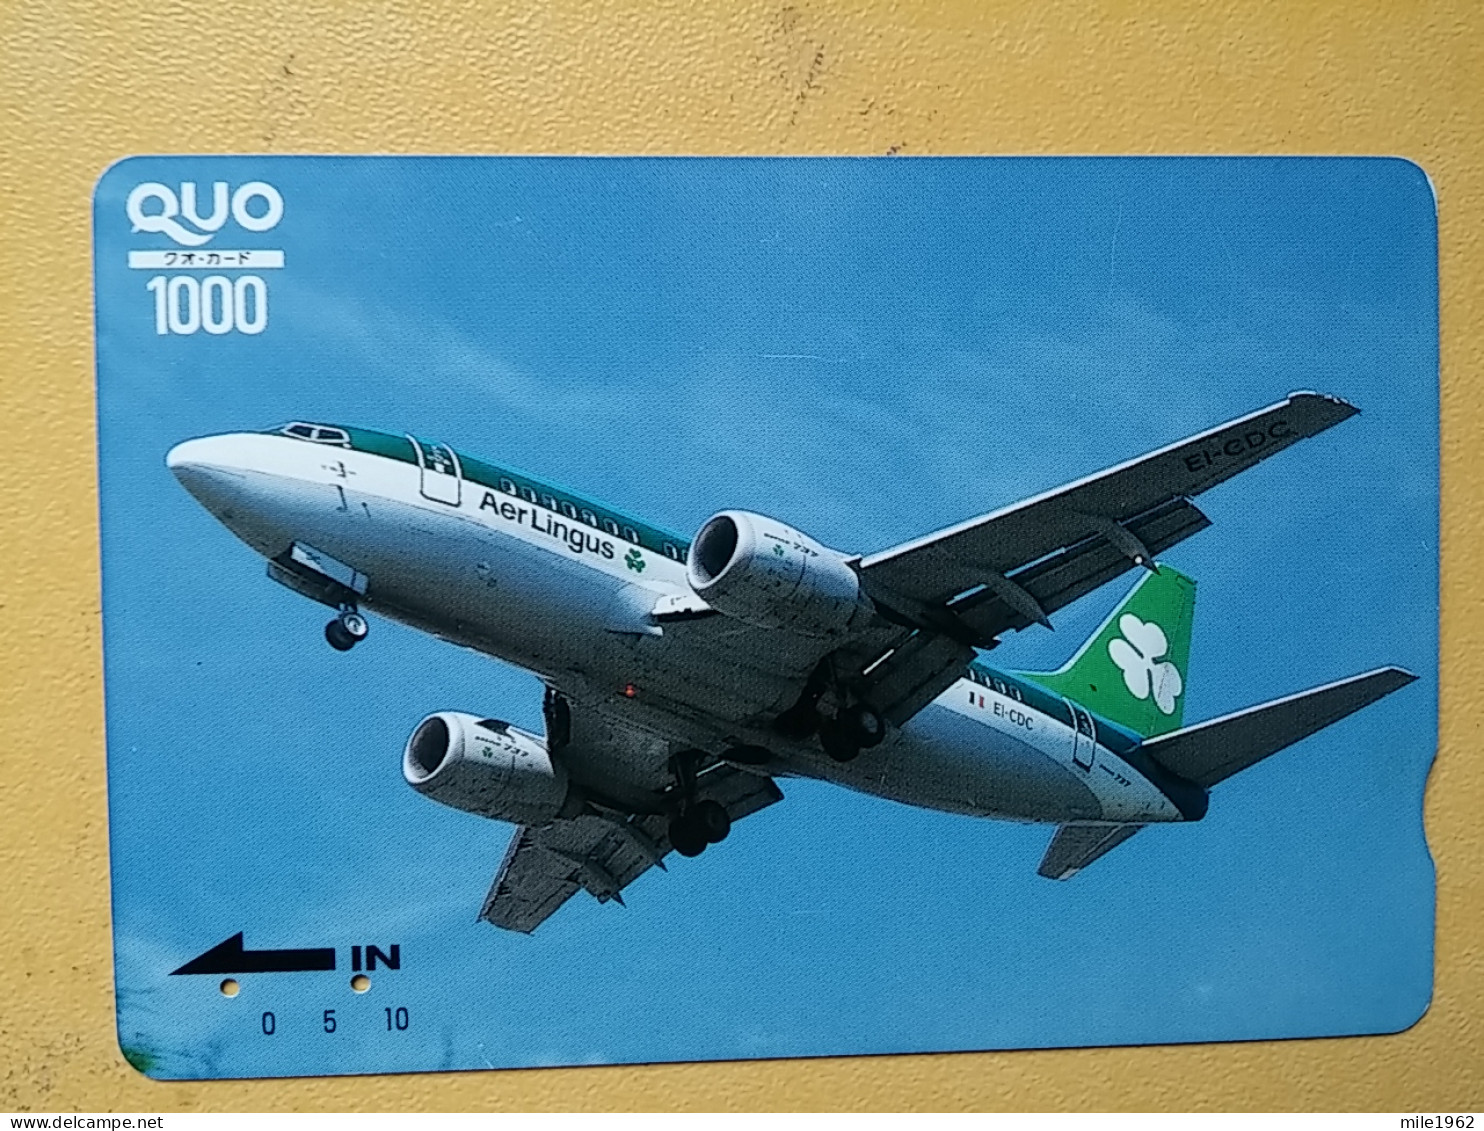 T-443 - JAPAN, Japon, Nipon, Carte Prepayee, Prepaid Card, Avion, Plane, Avio - Flugzeuge